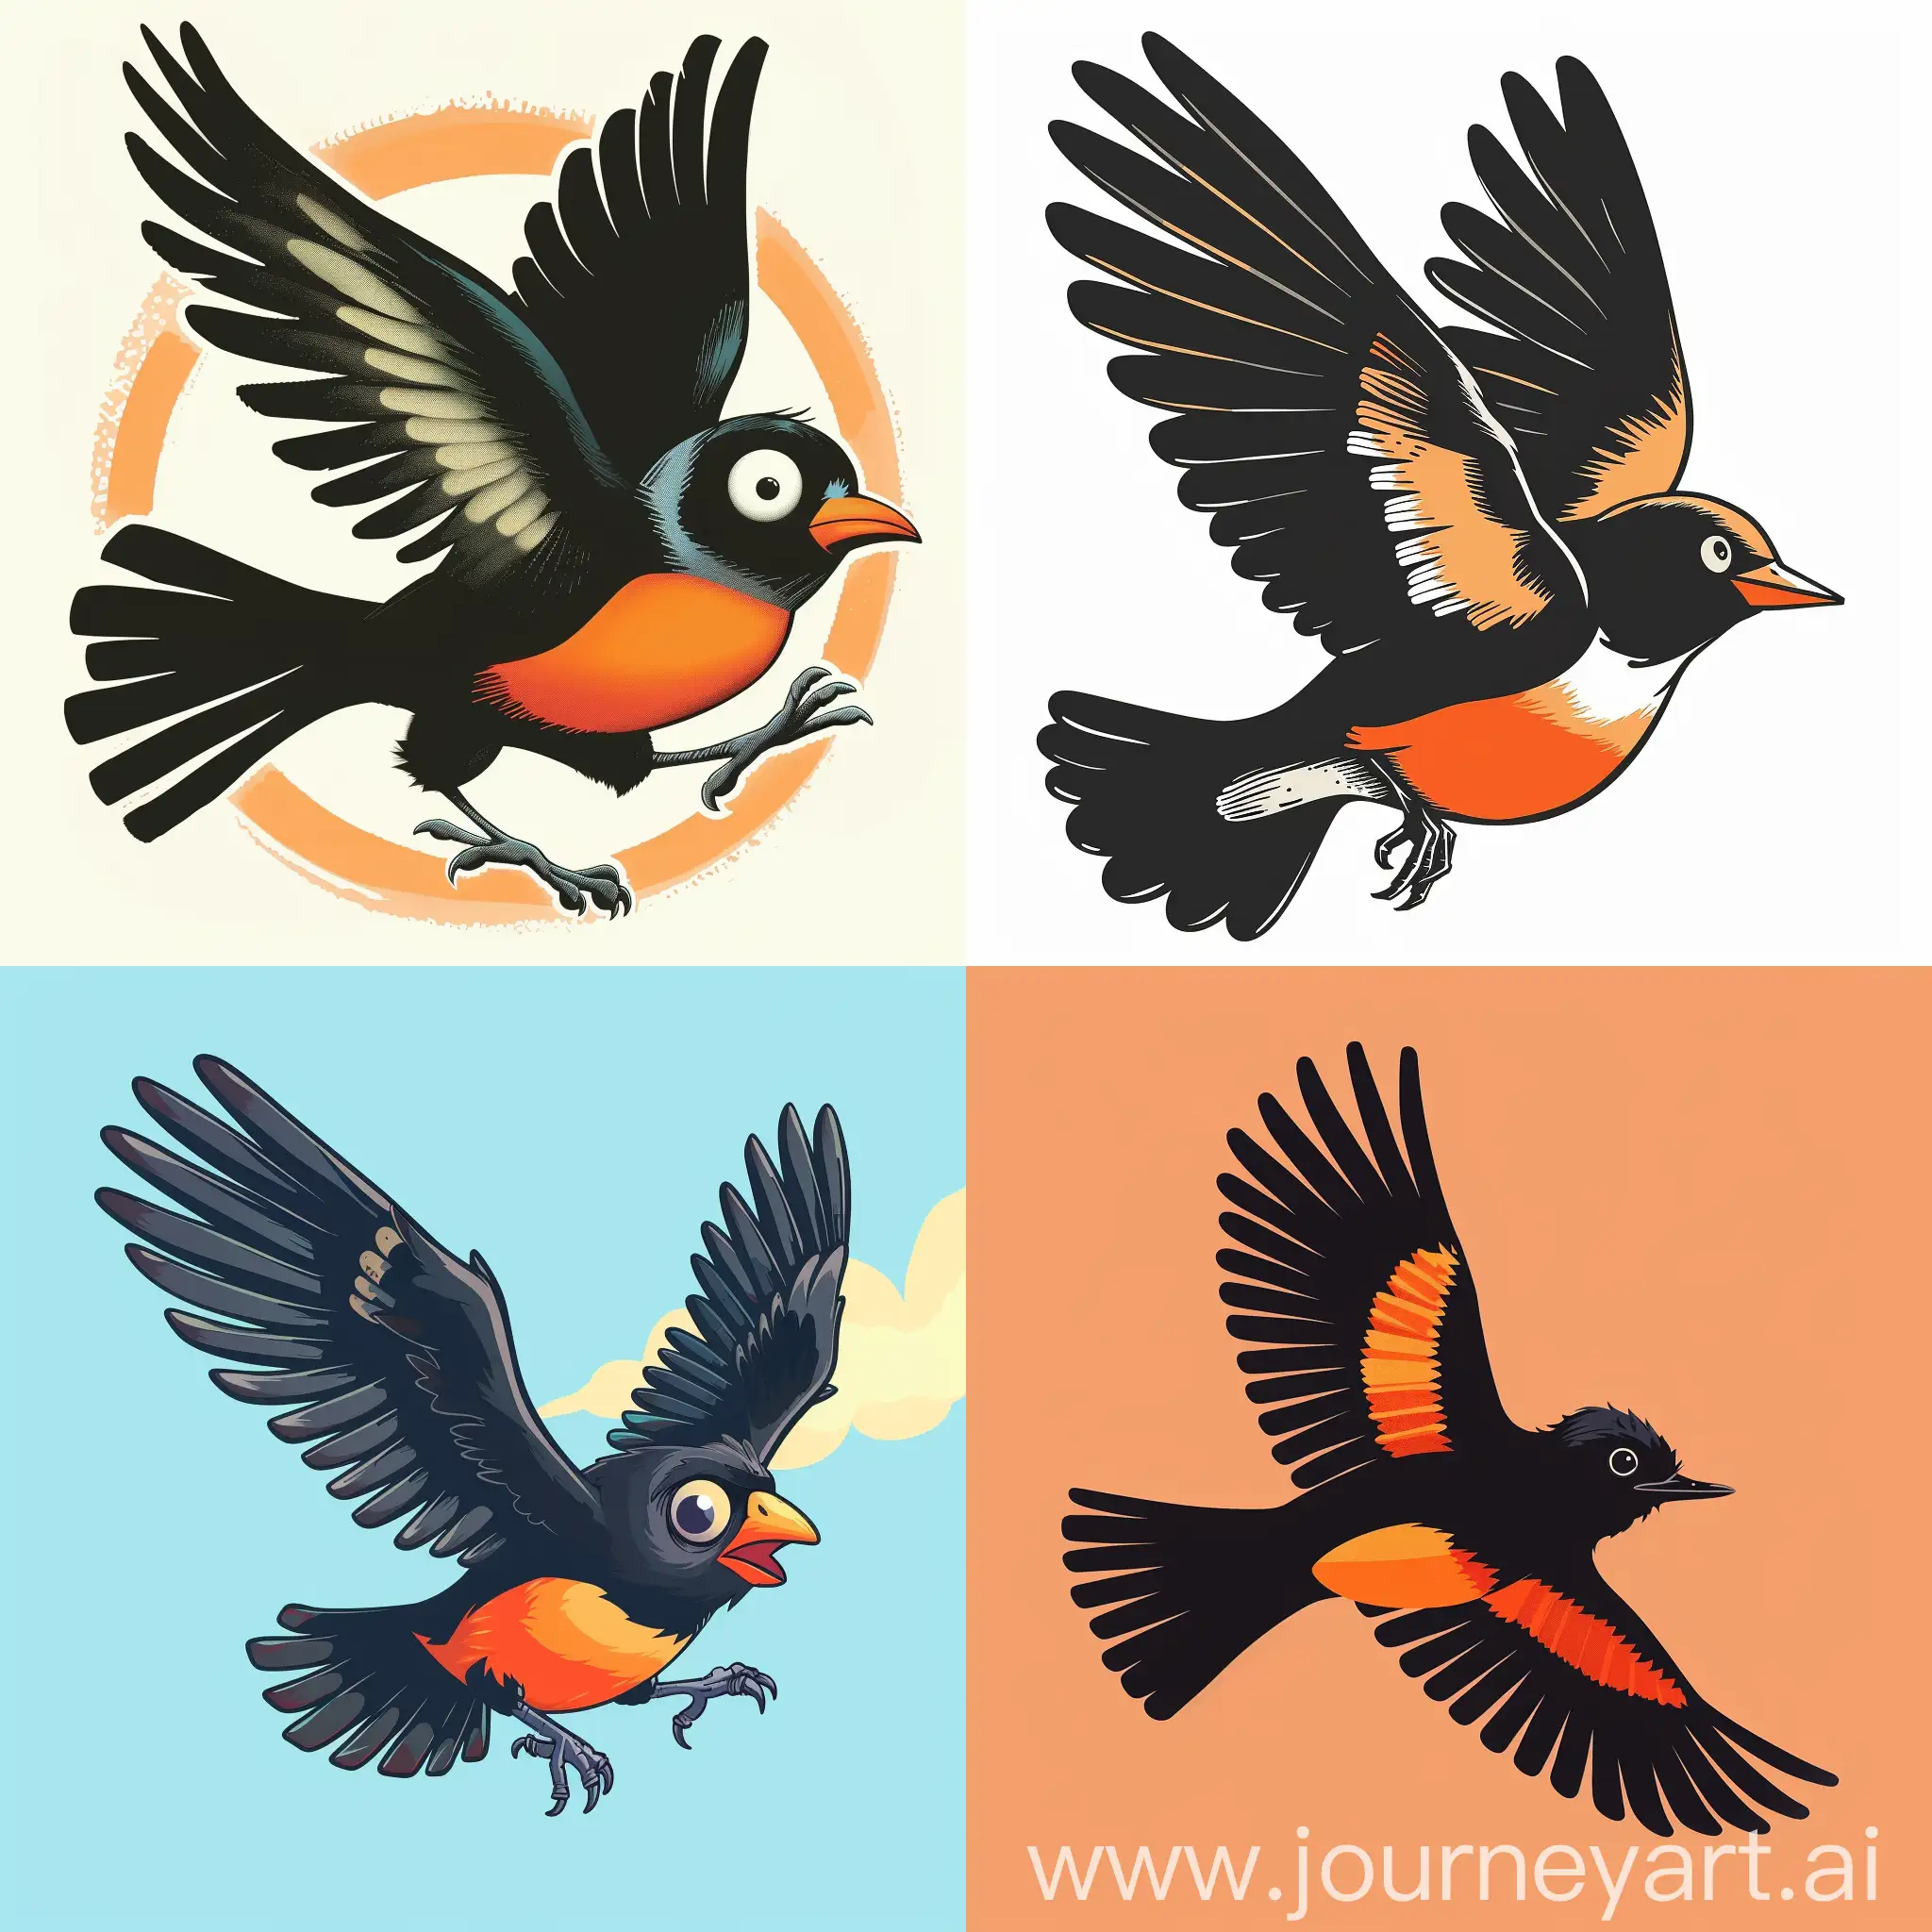 Vintage-Retro-Style-Cartoon-Black-Bird-Flying-with-Orange-Belly